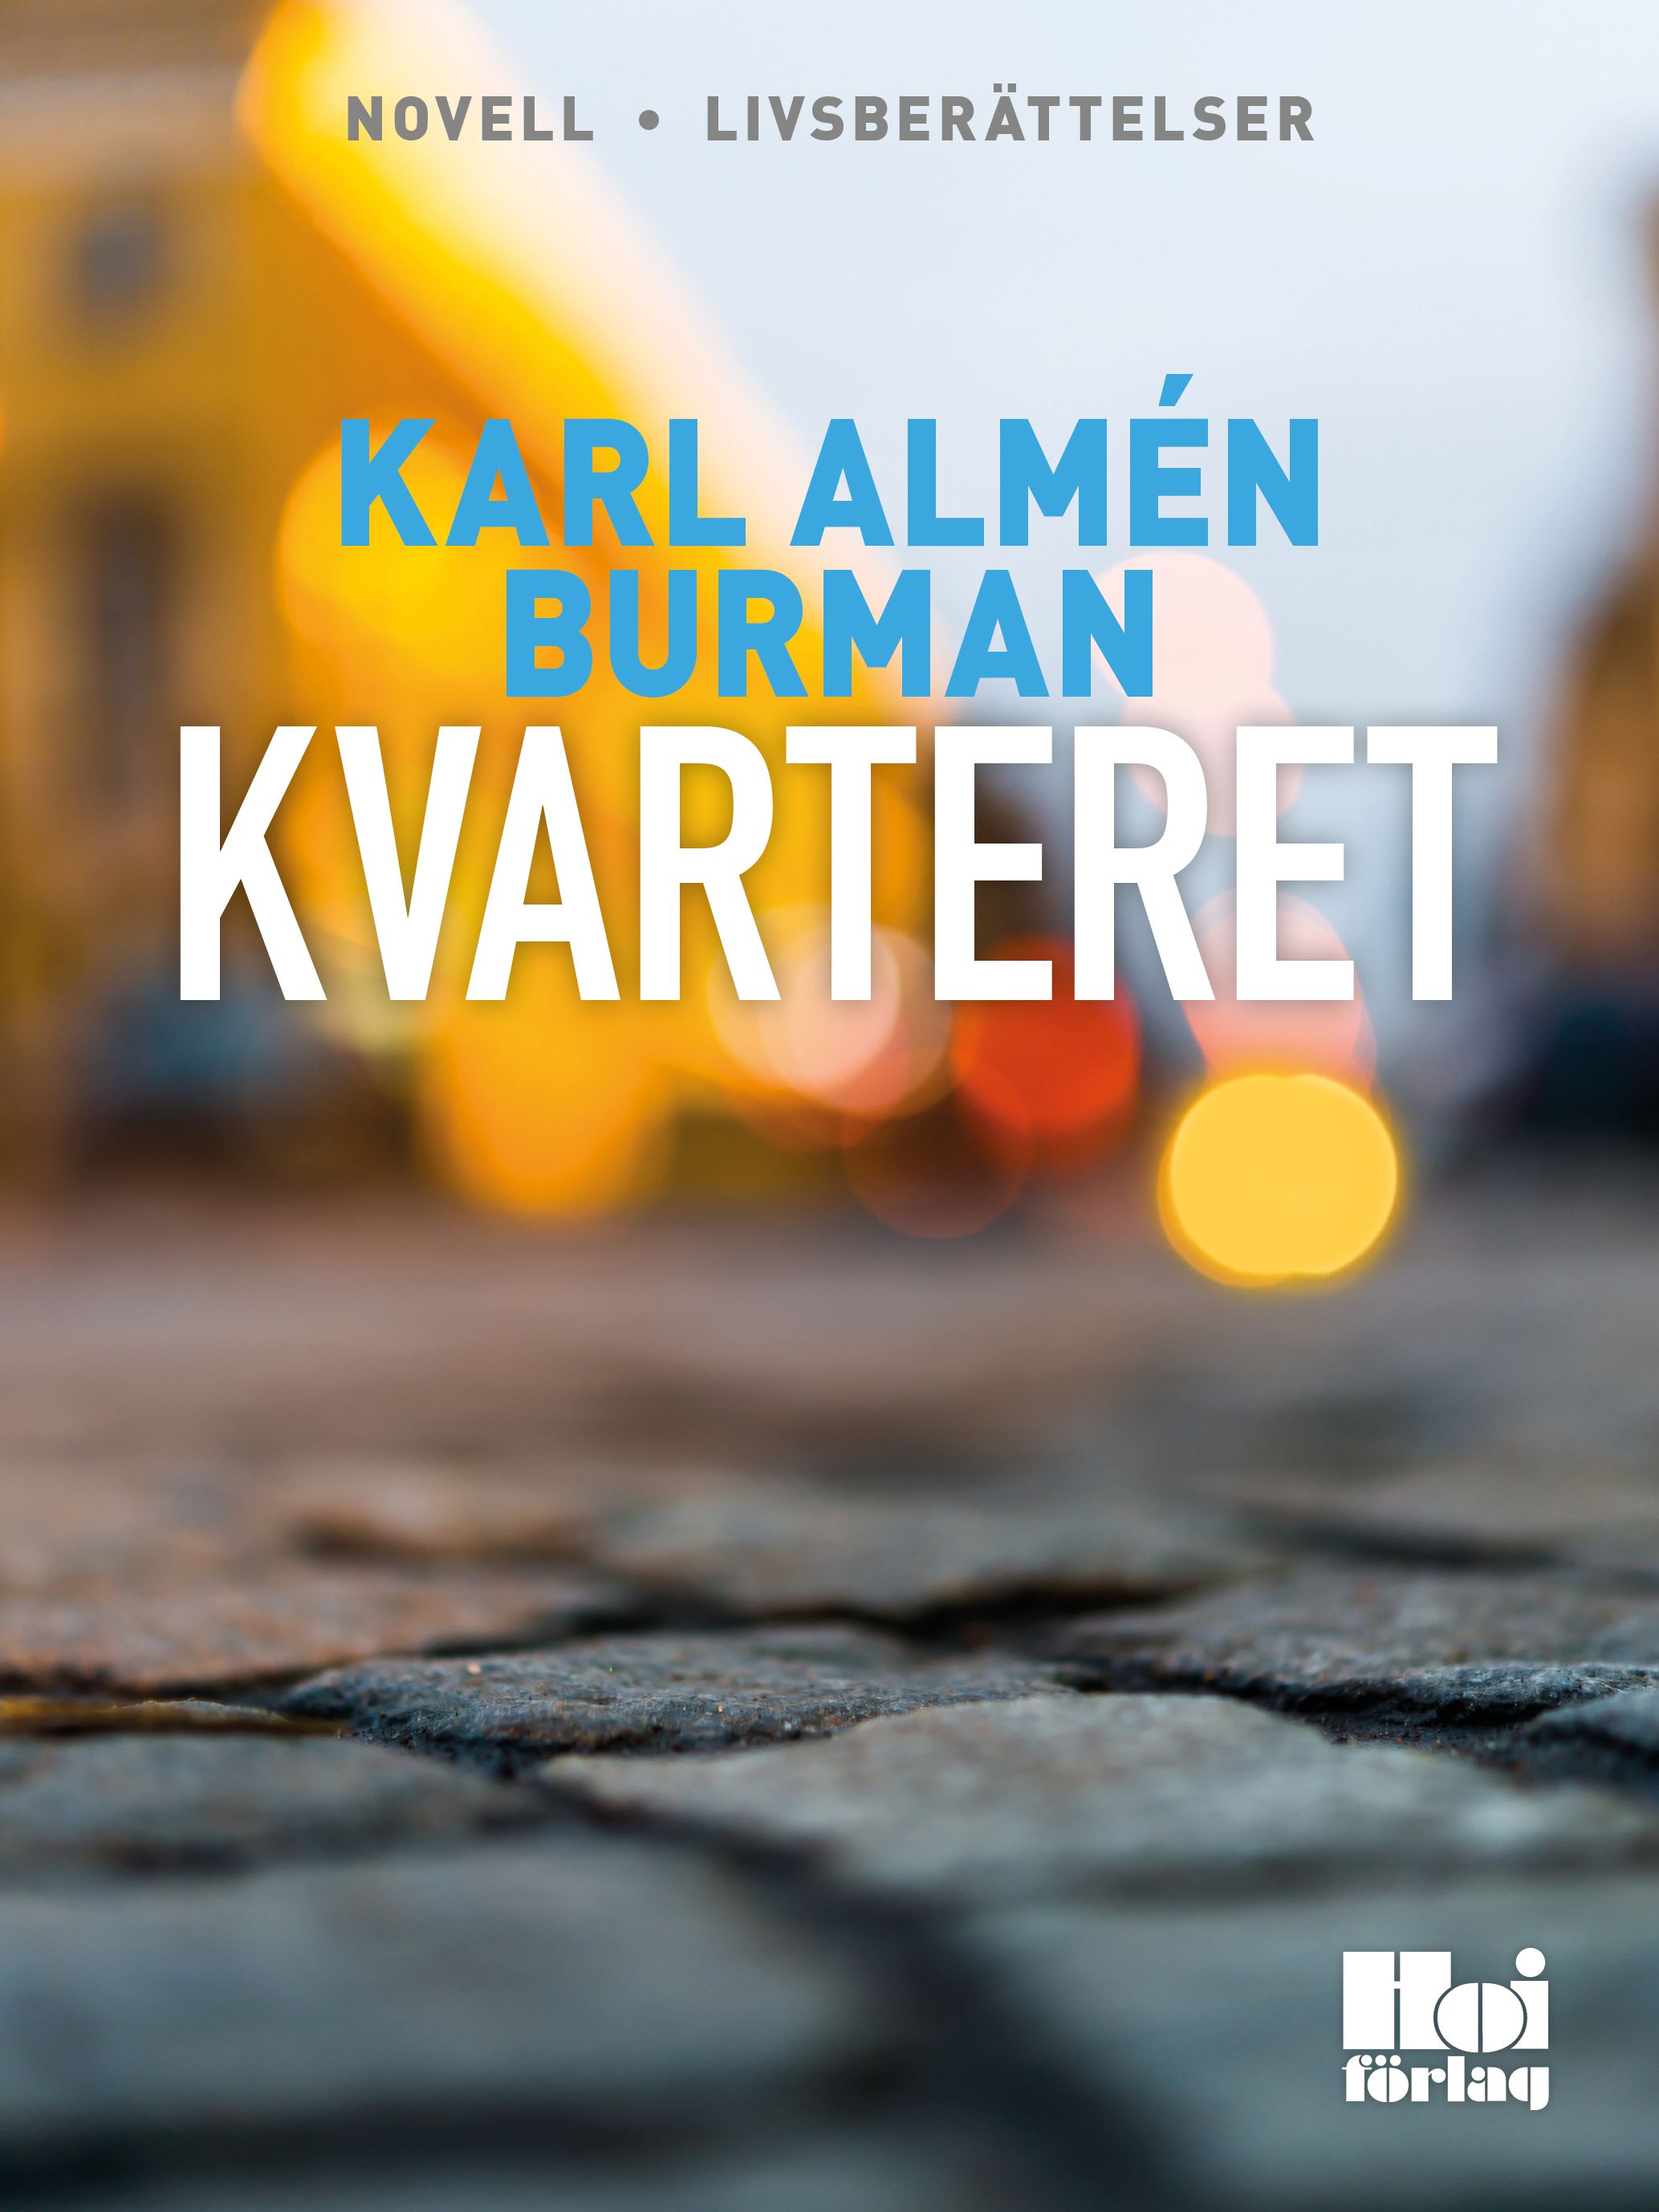 Kvarteret, eBook by Karl Almén Burman